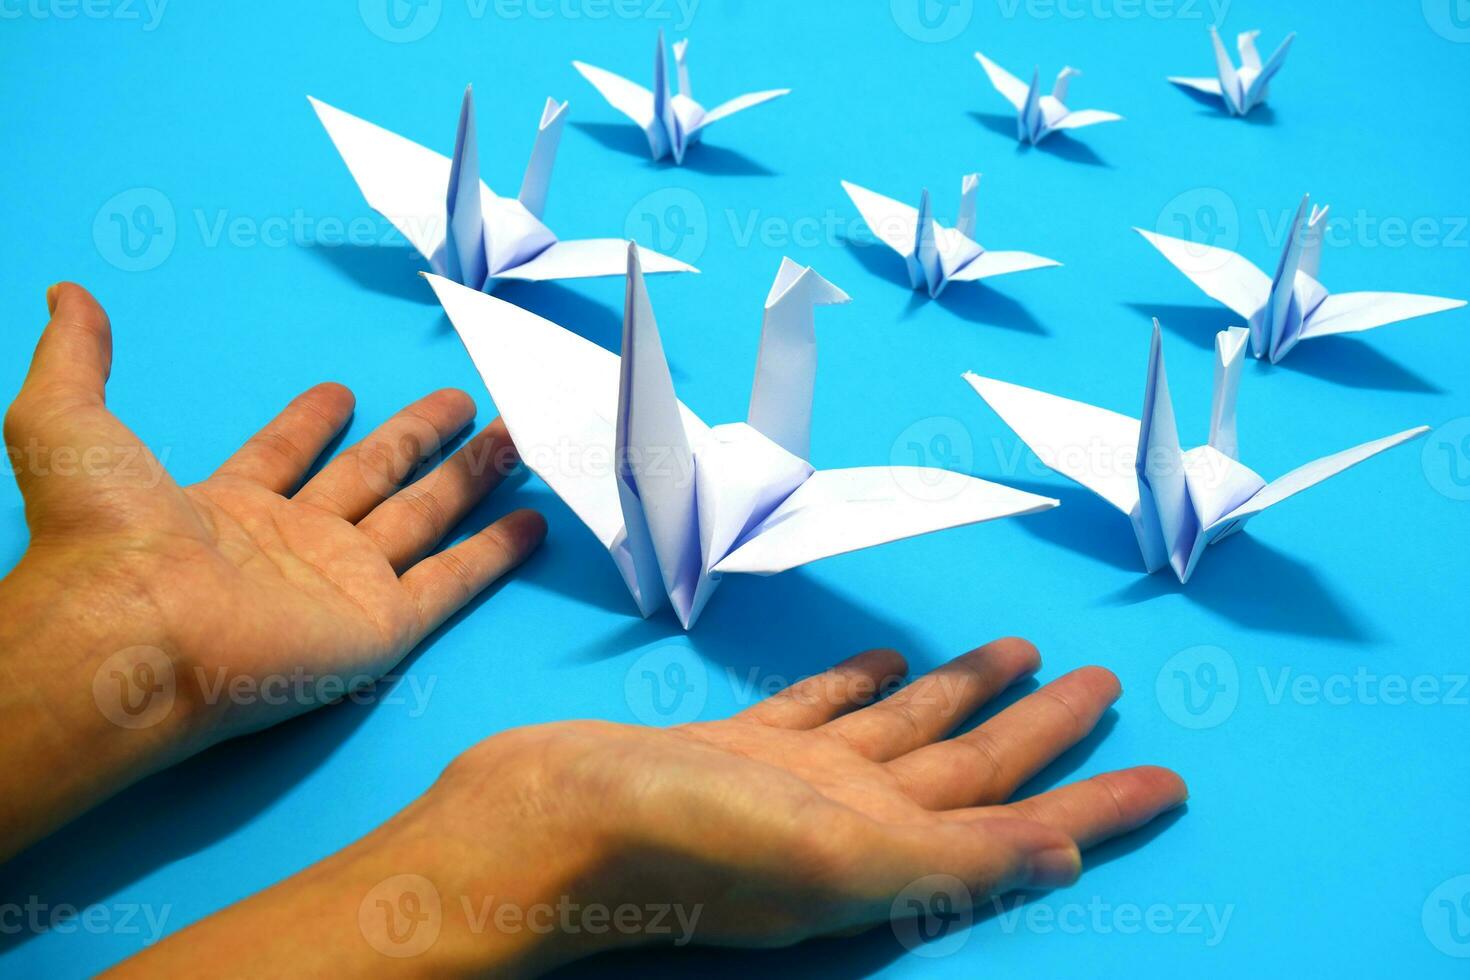 vit fågel origami papper på blå bakgrund. fågel fred, frihet eller möjligheter begrepp foto